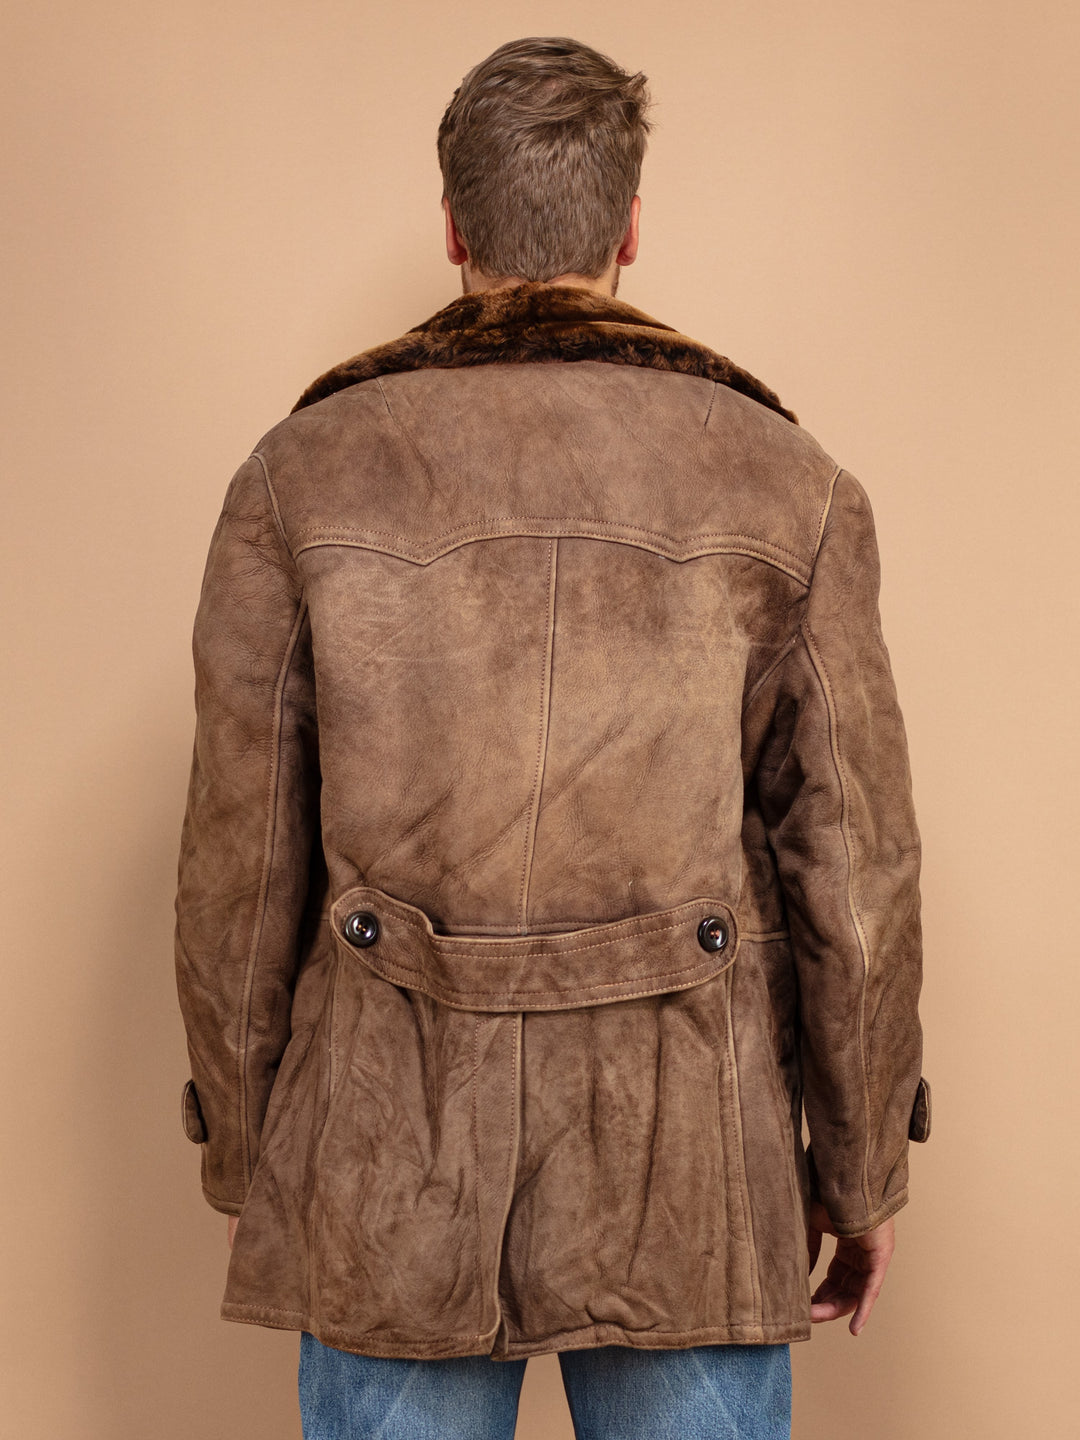 Shearling Men's Coat, Sheepskin Overcoat Large XL, Western Outerwear, Winter Suede Coat, Shearling Coat,  70's Men's Coat, Gift For Husband